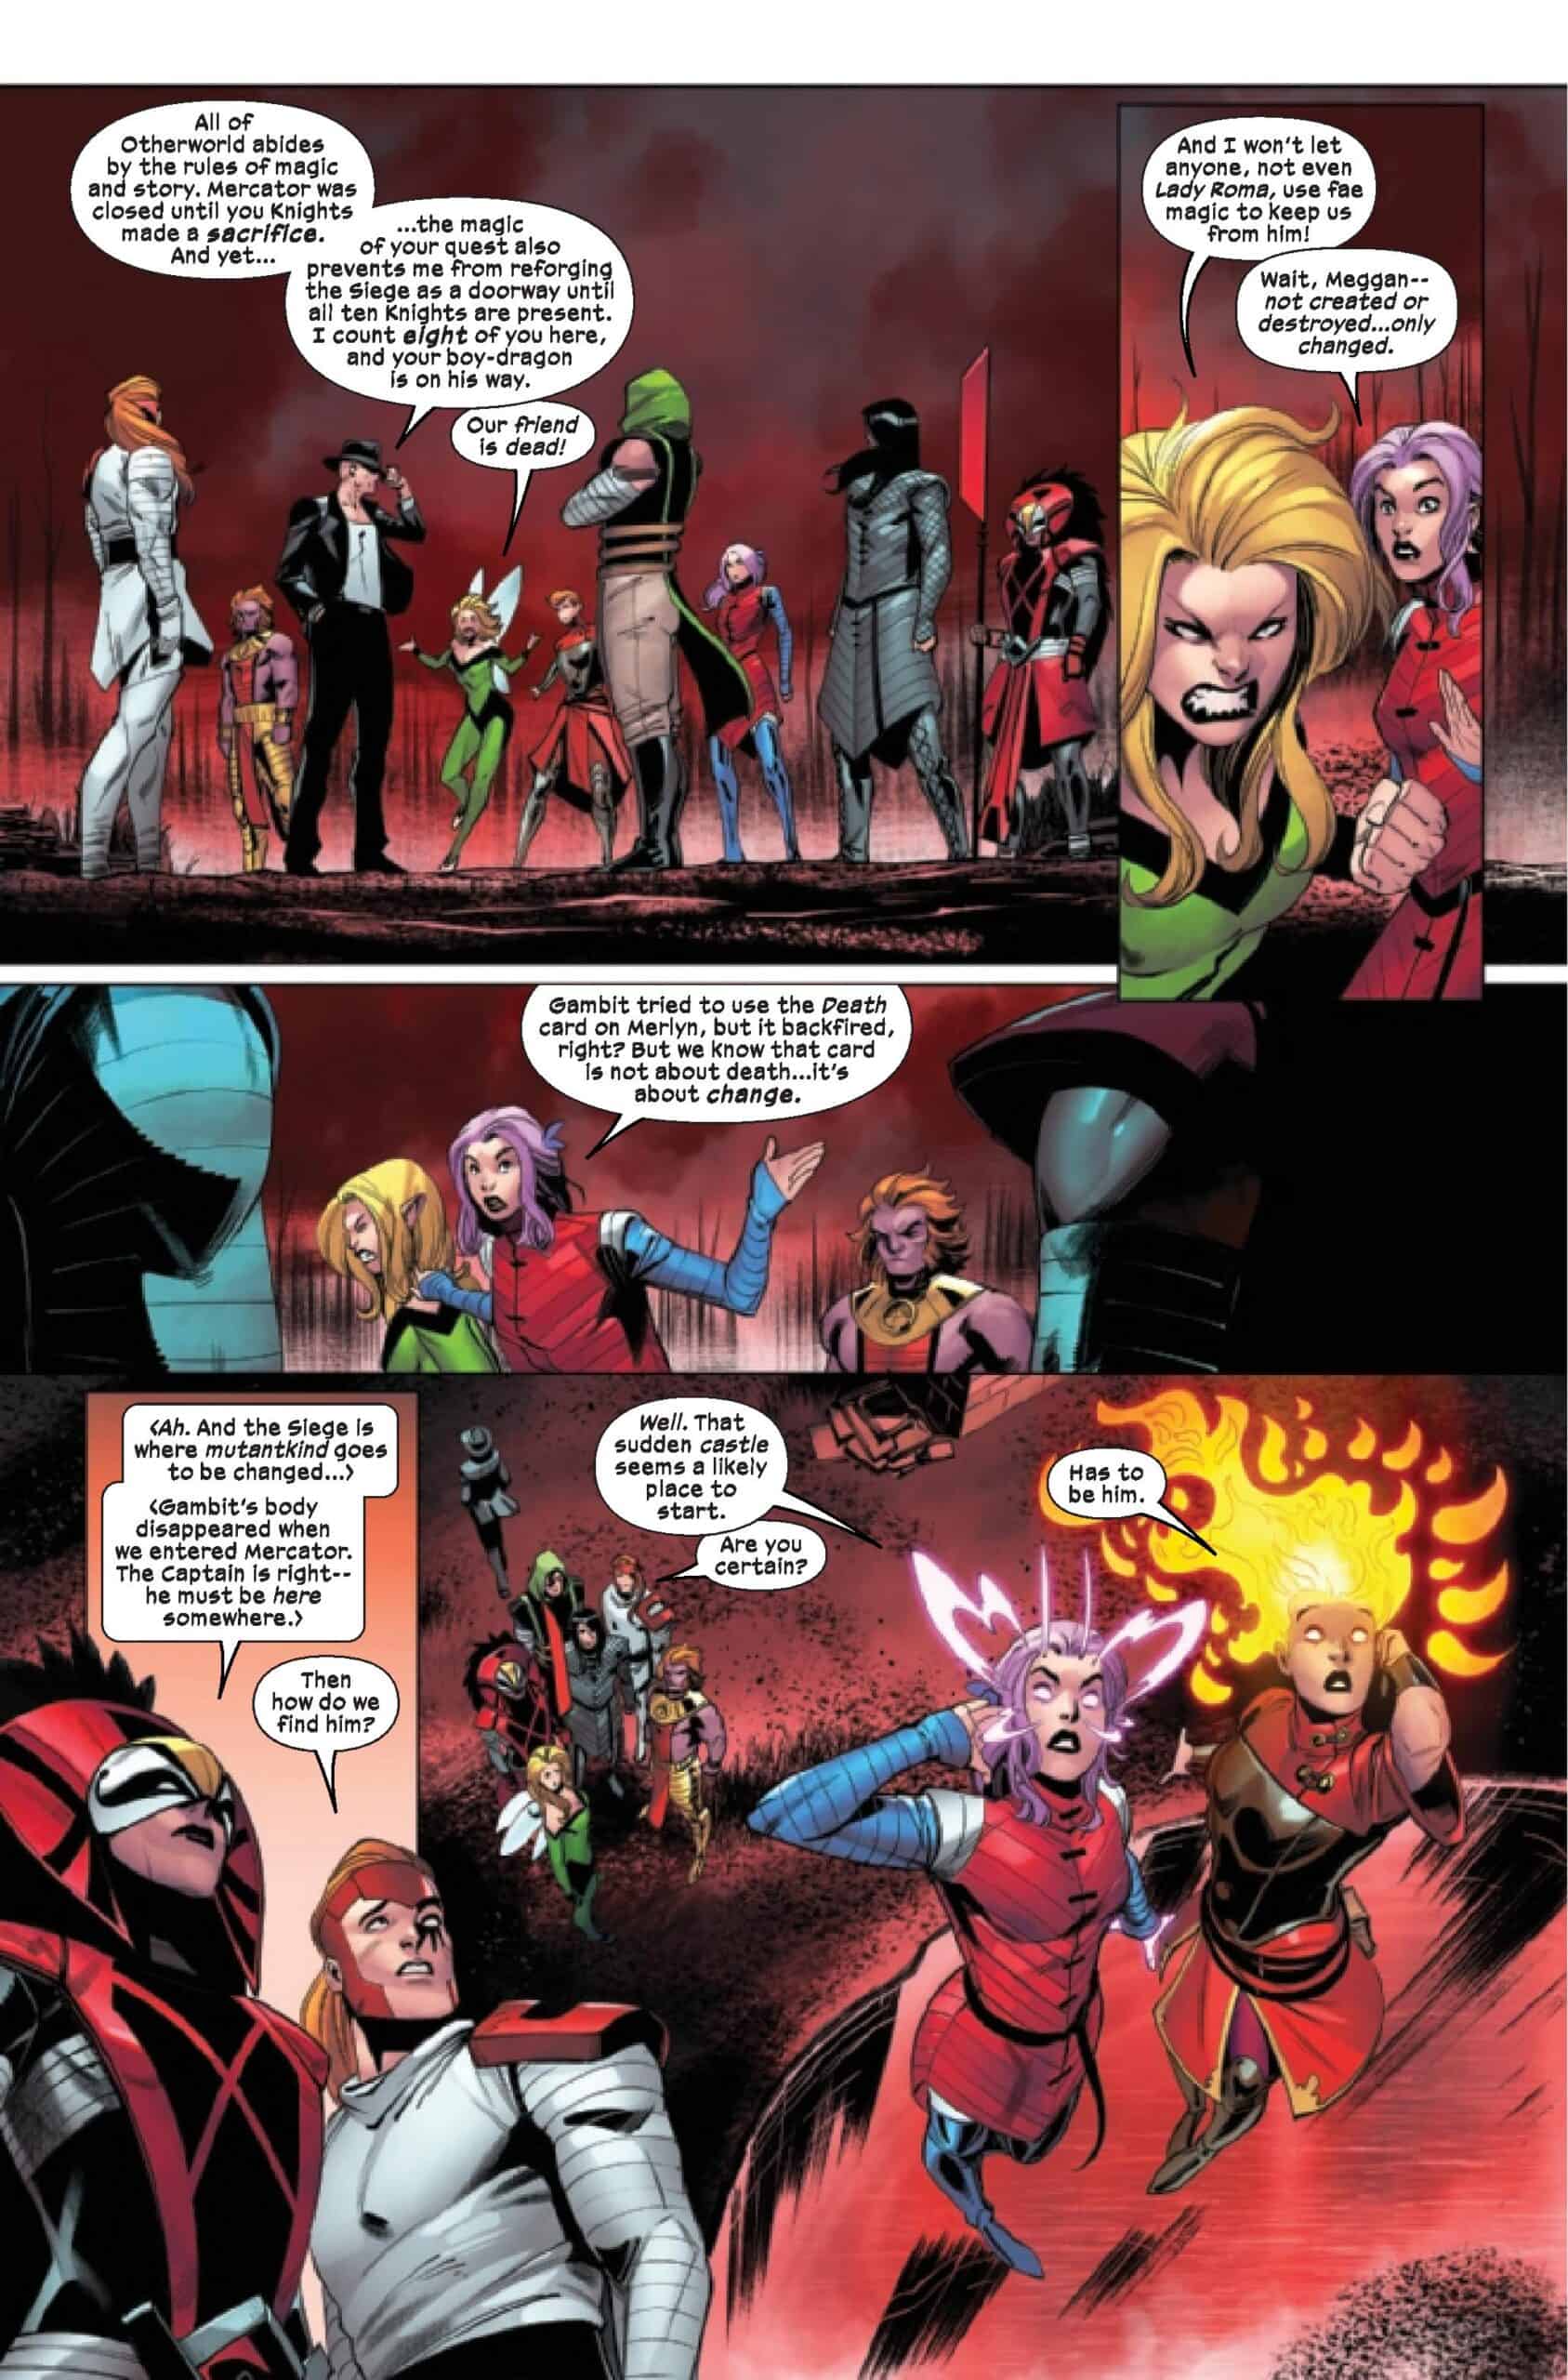 Rogue & Gambit #5 preview. : r/xmen